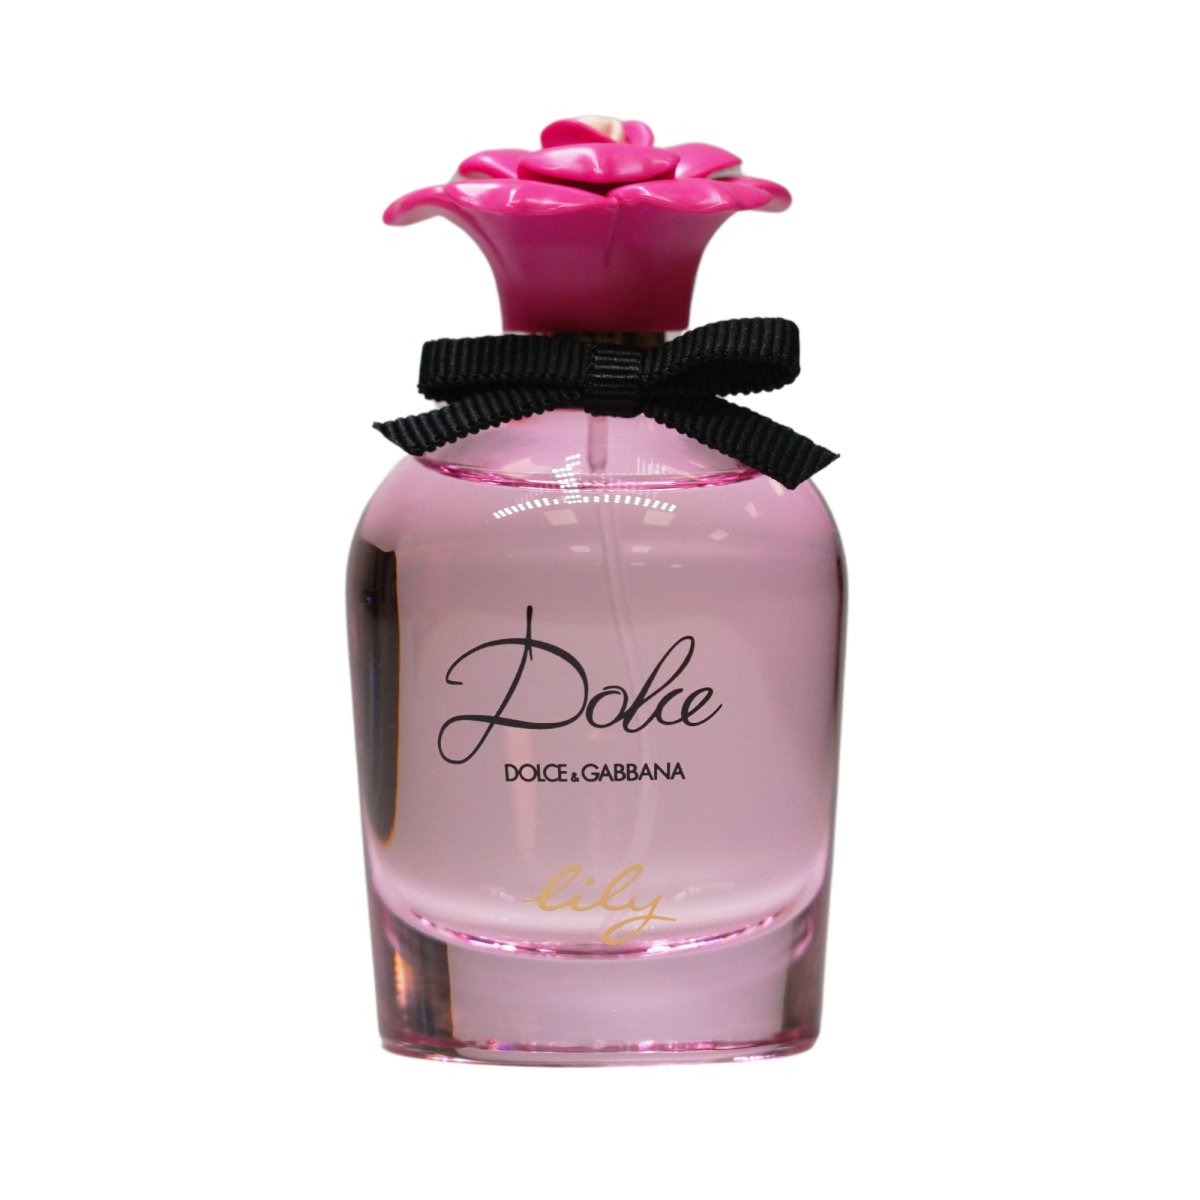 Dolce & Gabbana Dolce Lily Giftset 75ml EDT + 10ml EDT + 50ml Body Lotion - Dolce & Gabbana - Gift Set